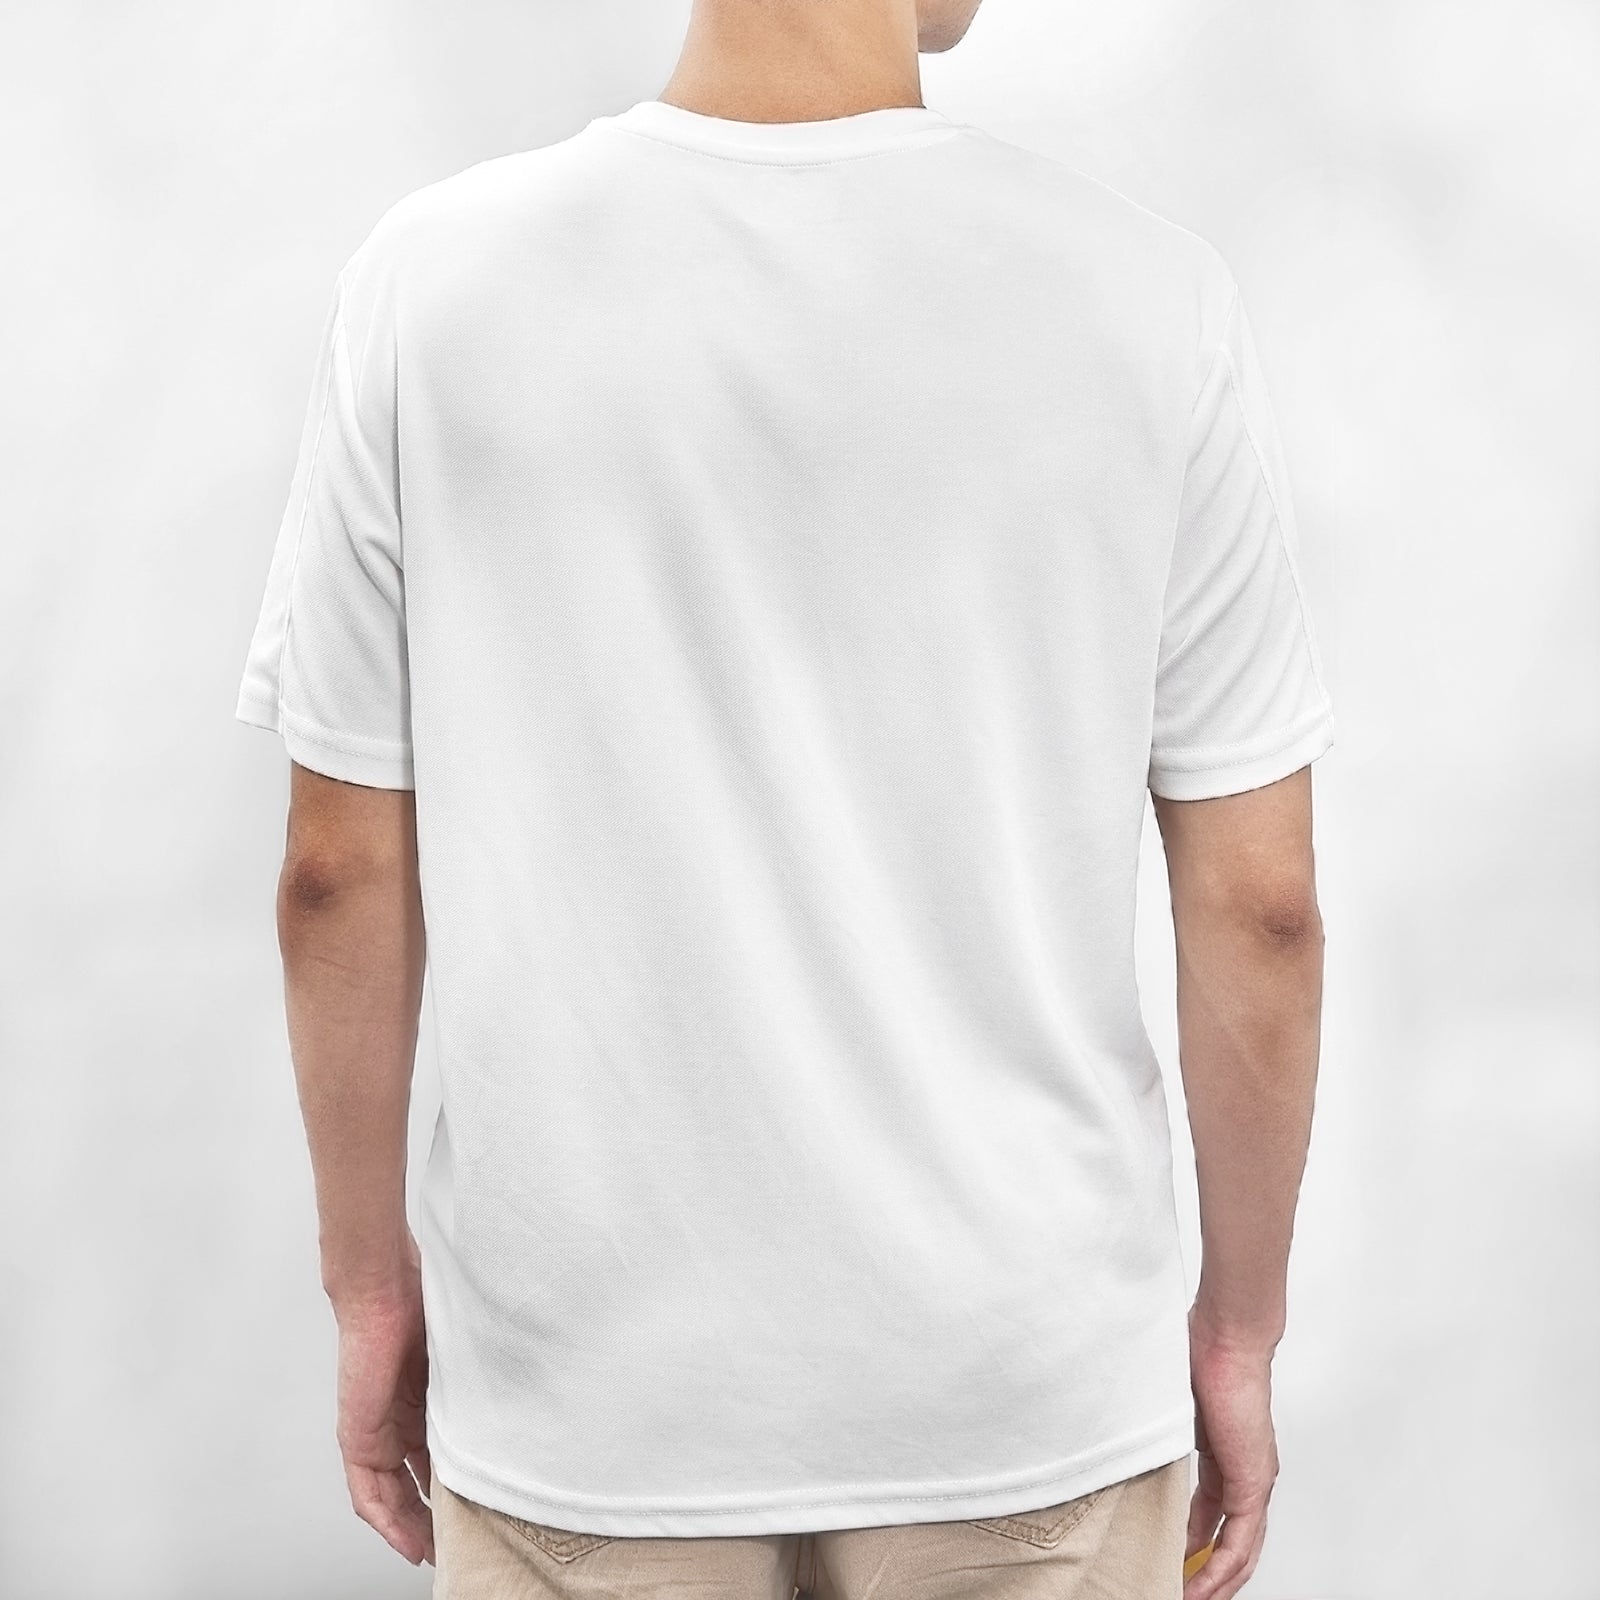 Custom T-shirt Photo Men's Cotton T-shirt Short Sleeve White